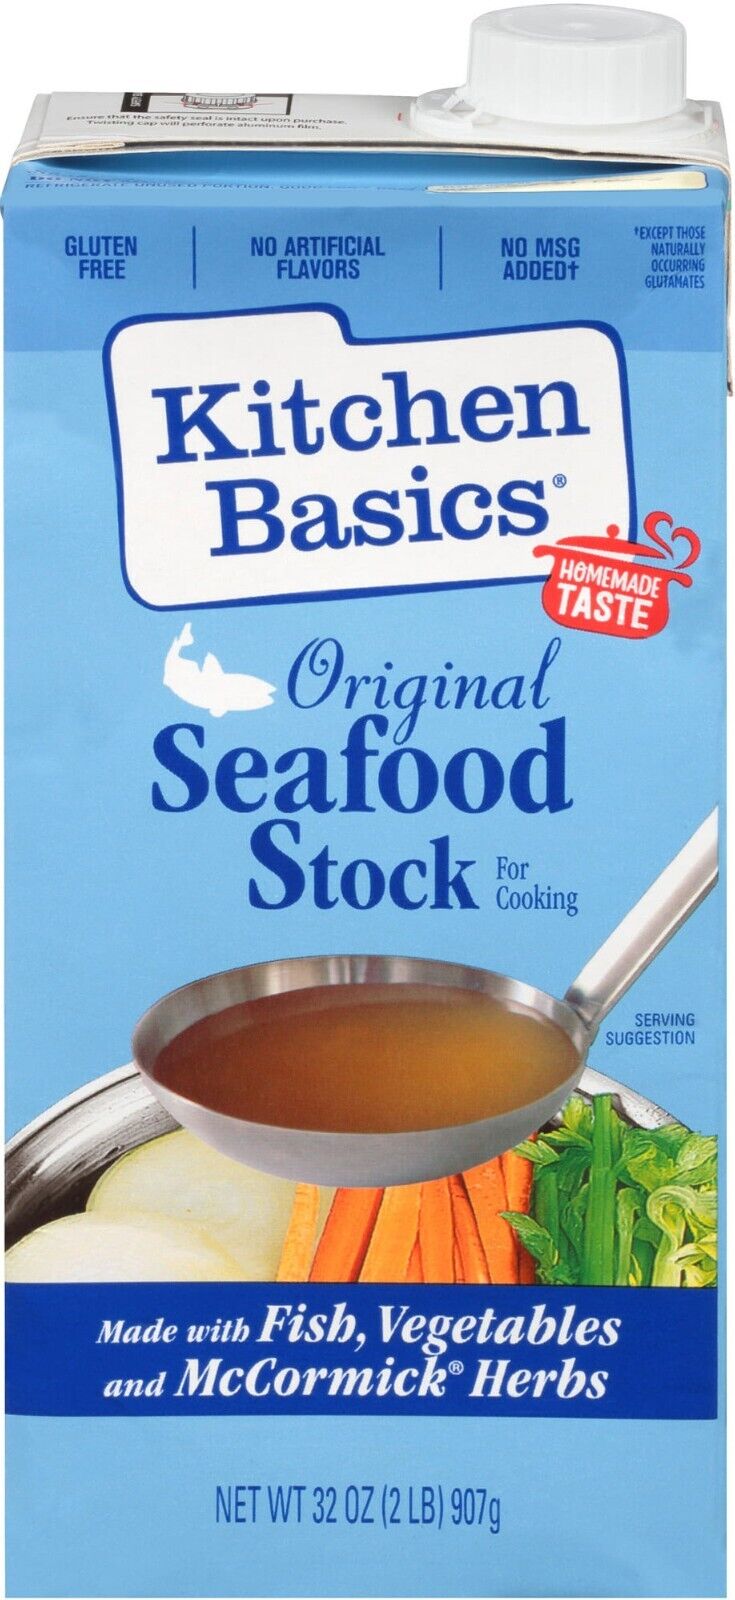 Kitchen Basics Original Seafood Stock - Gluten Free - 32 oz